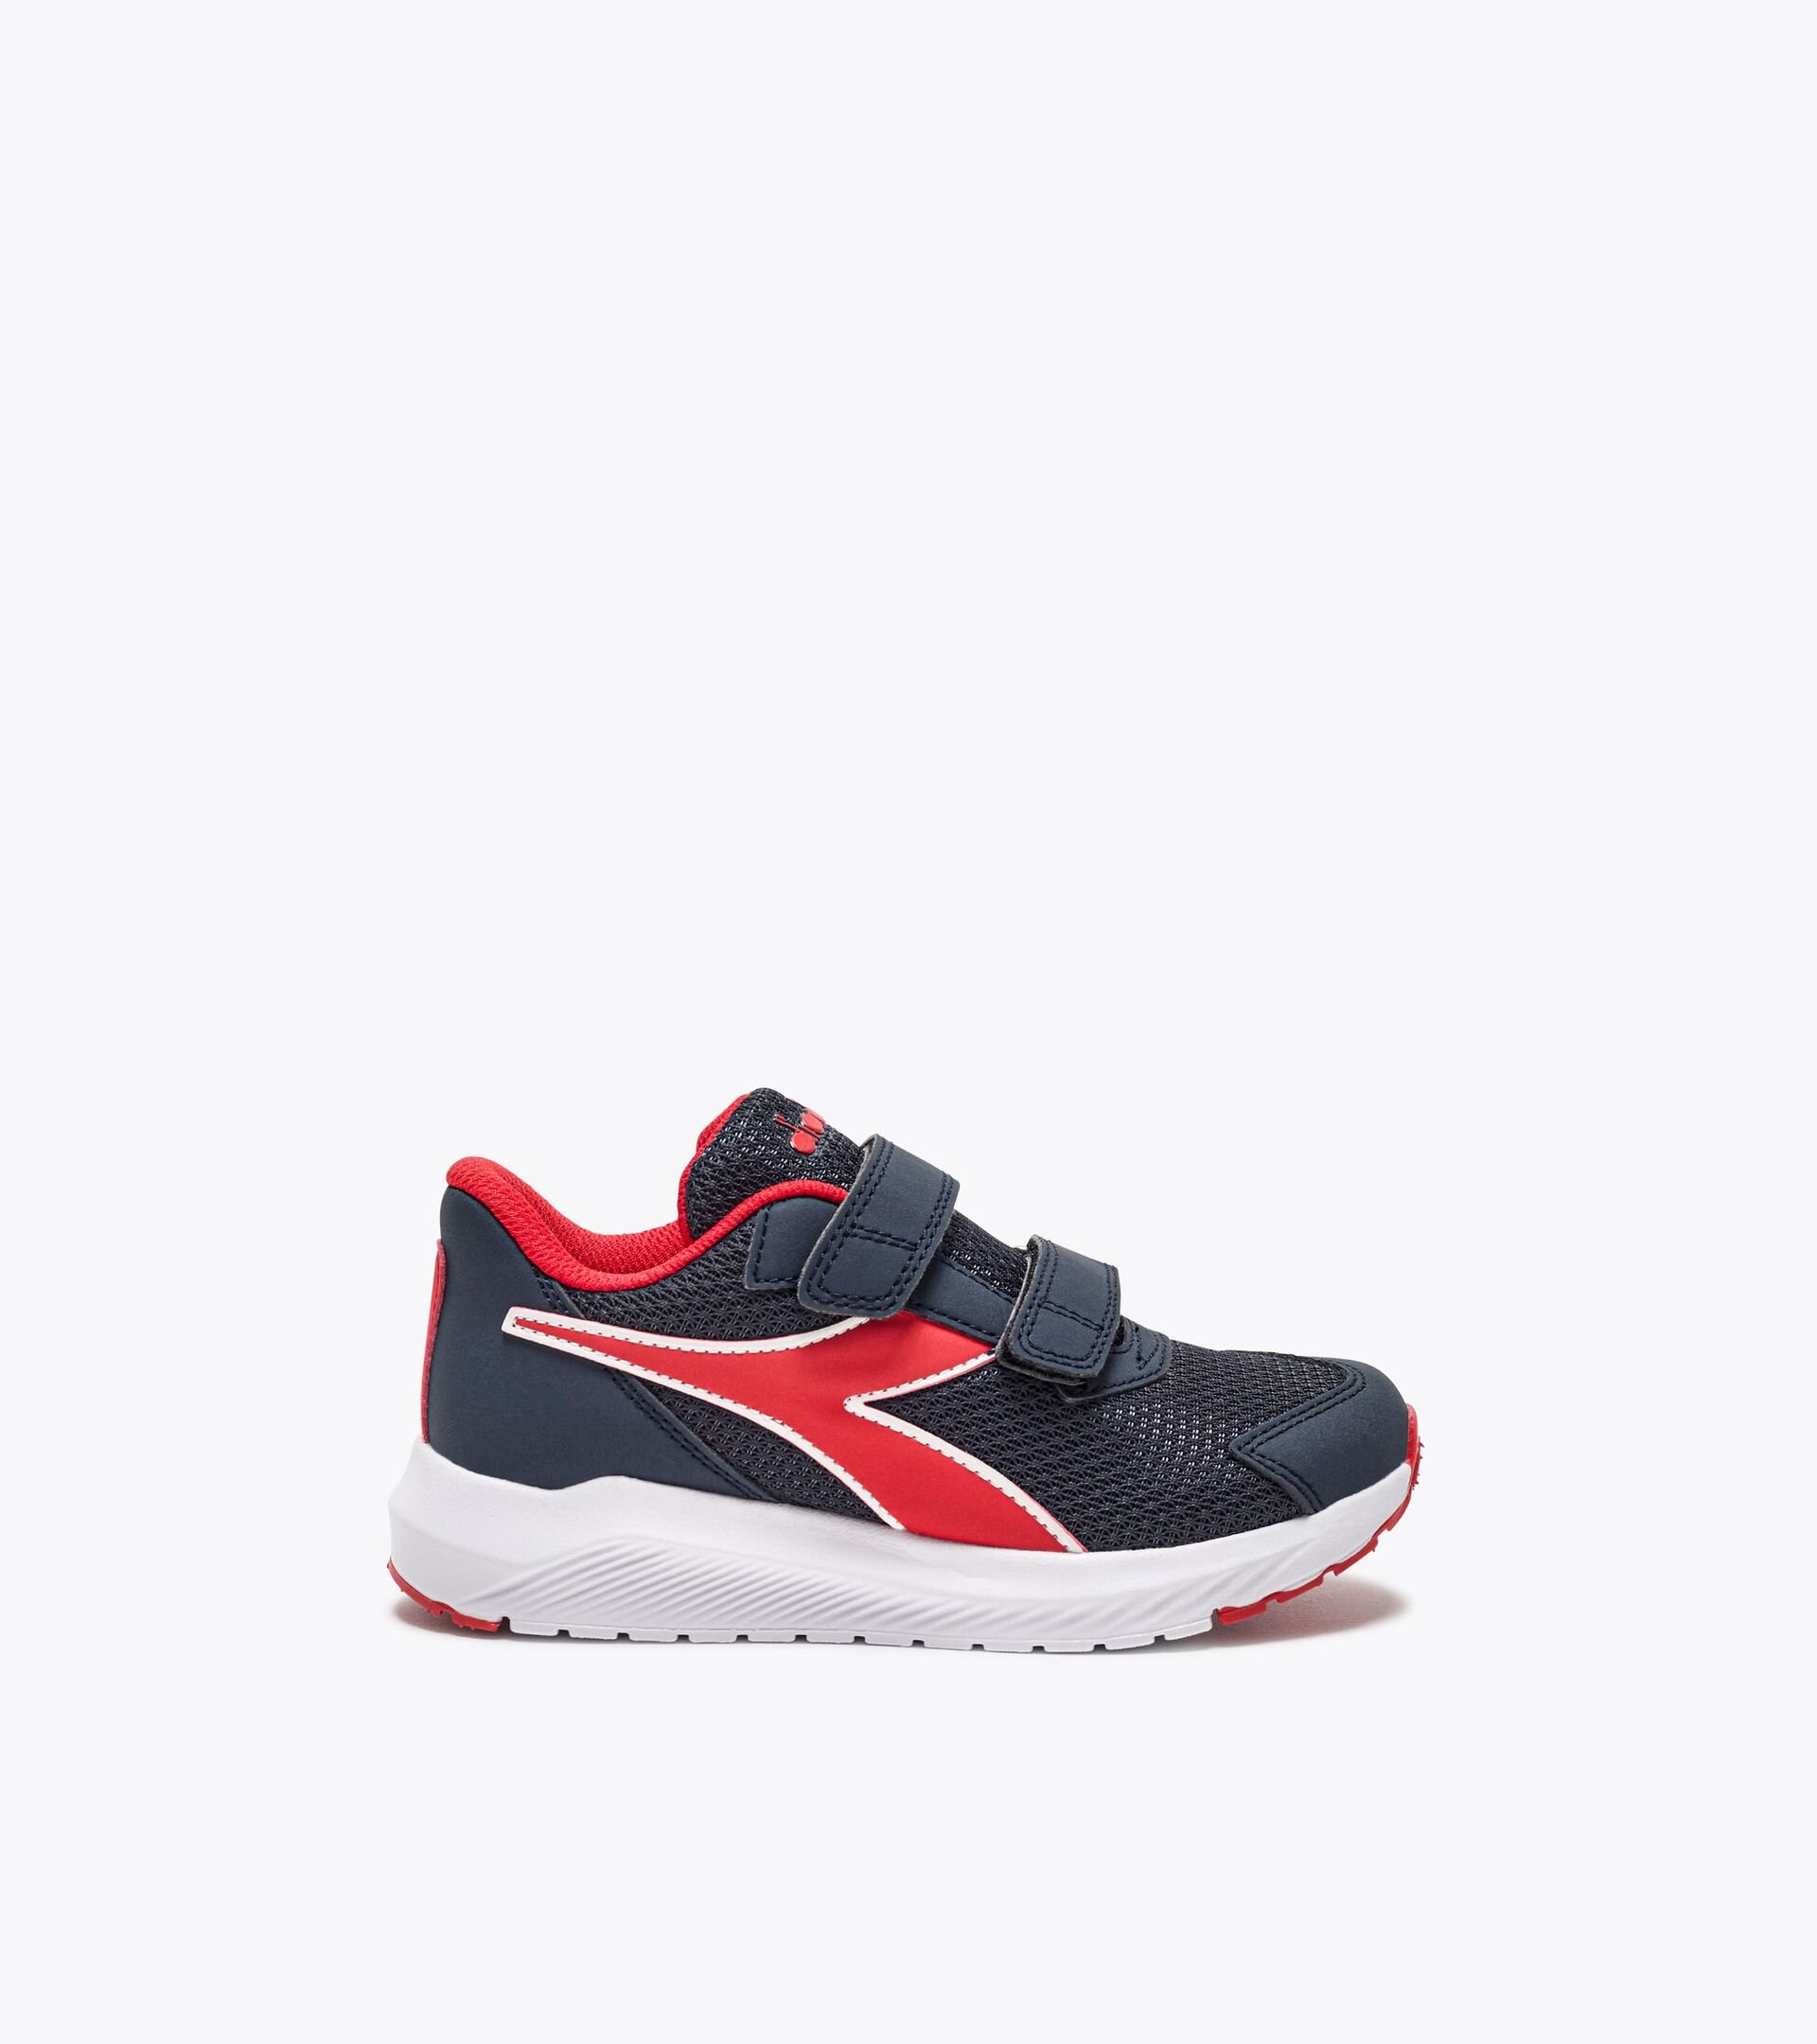 Junior running shoe - Unisex
 FALCON 4 JR V BLUE CORSAIR /HIGH RISK RED - Diadora